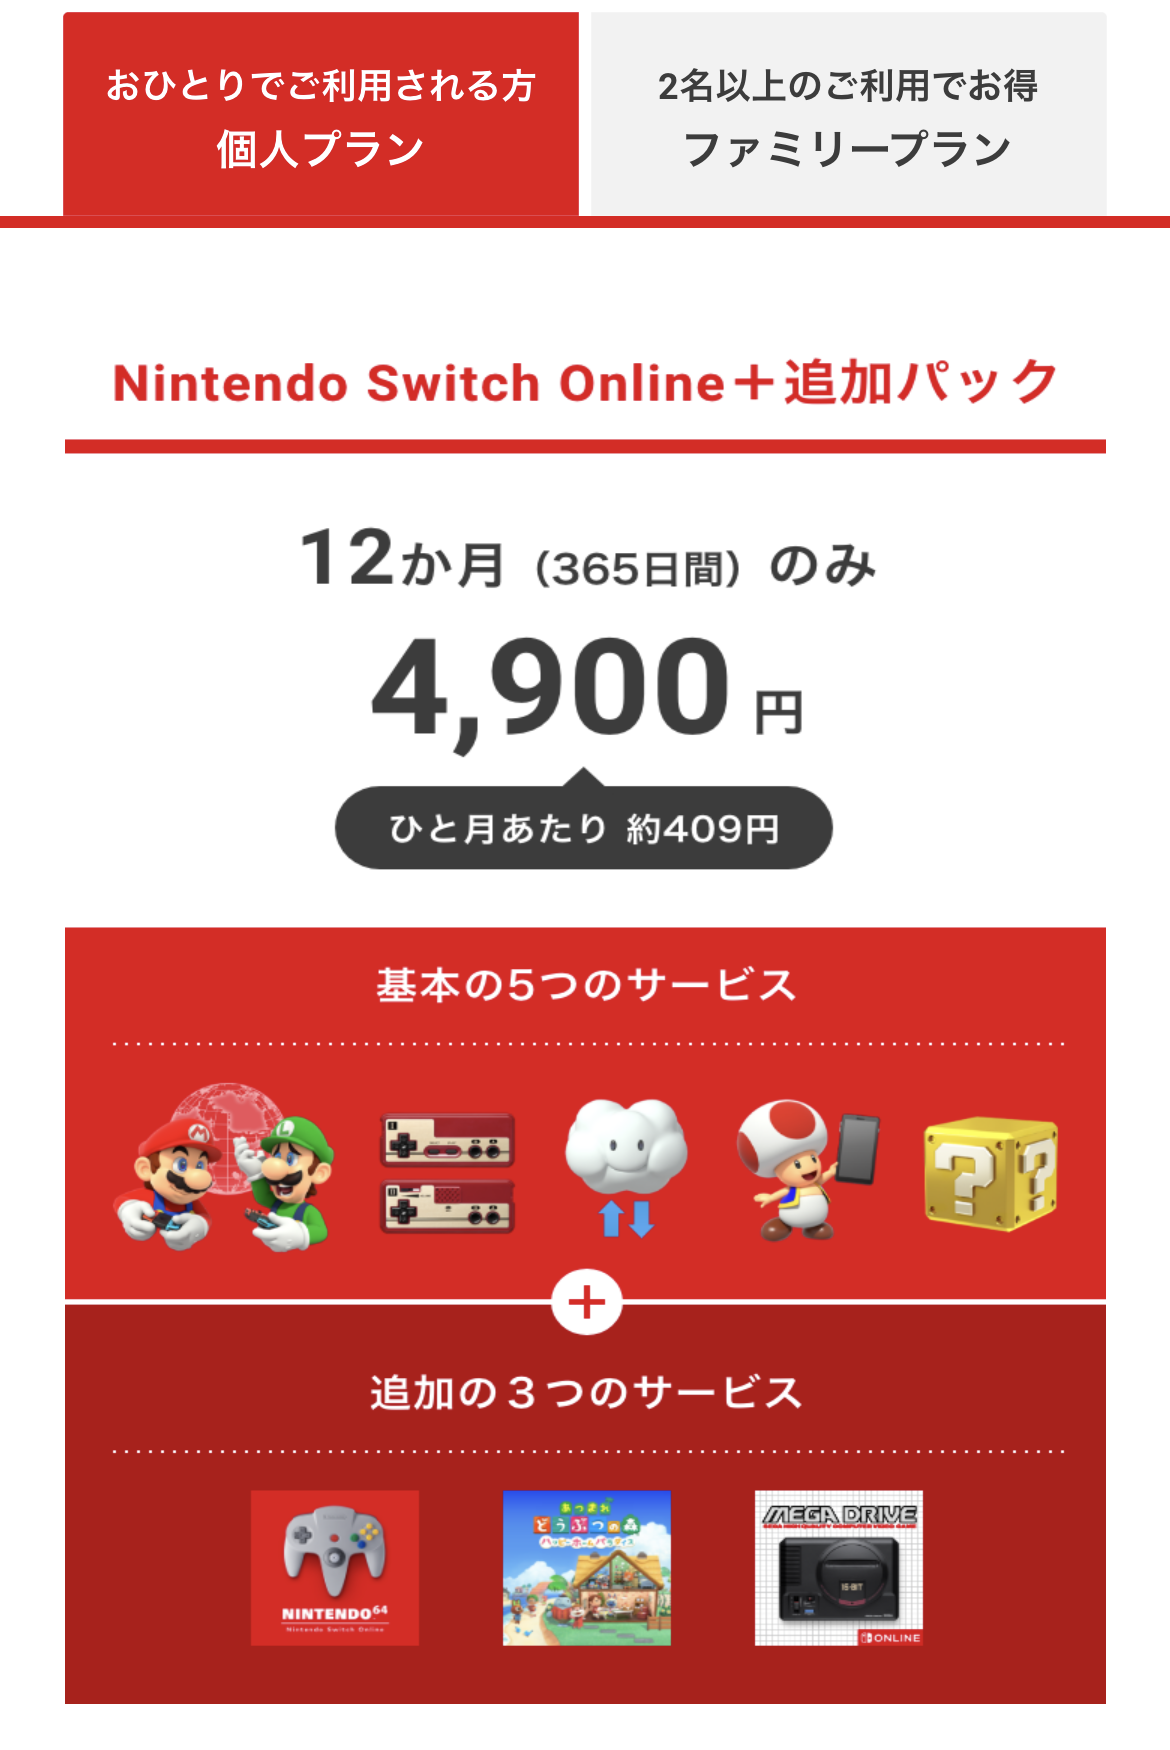 Nintendo Switch Online + 追加パック 個人プラン